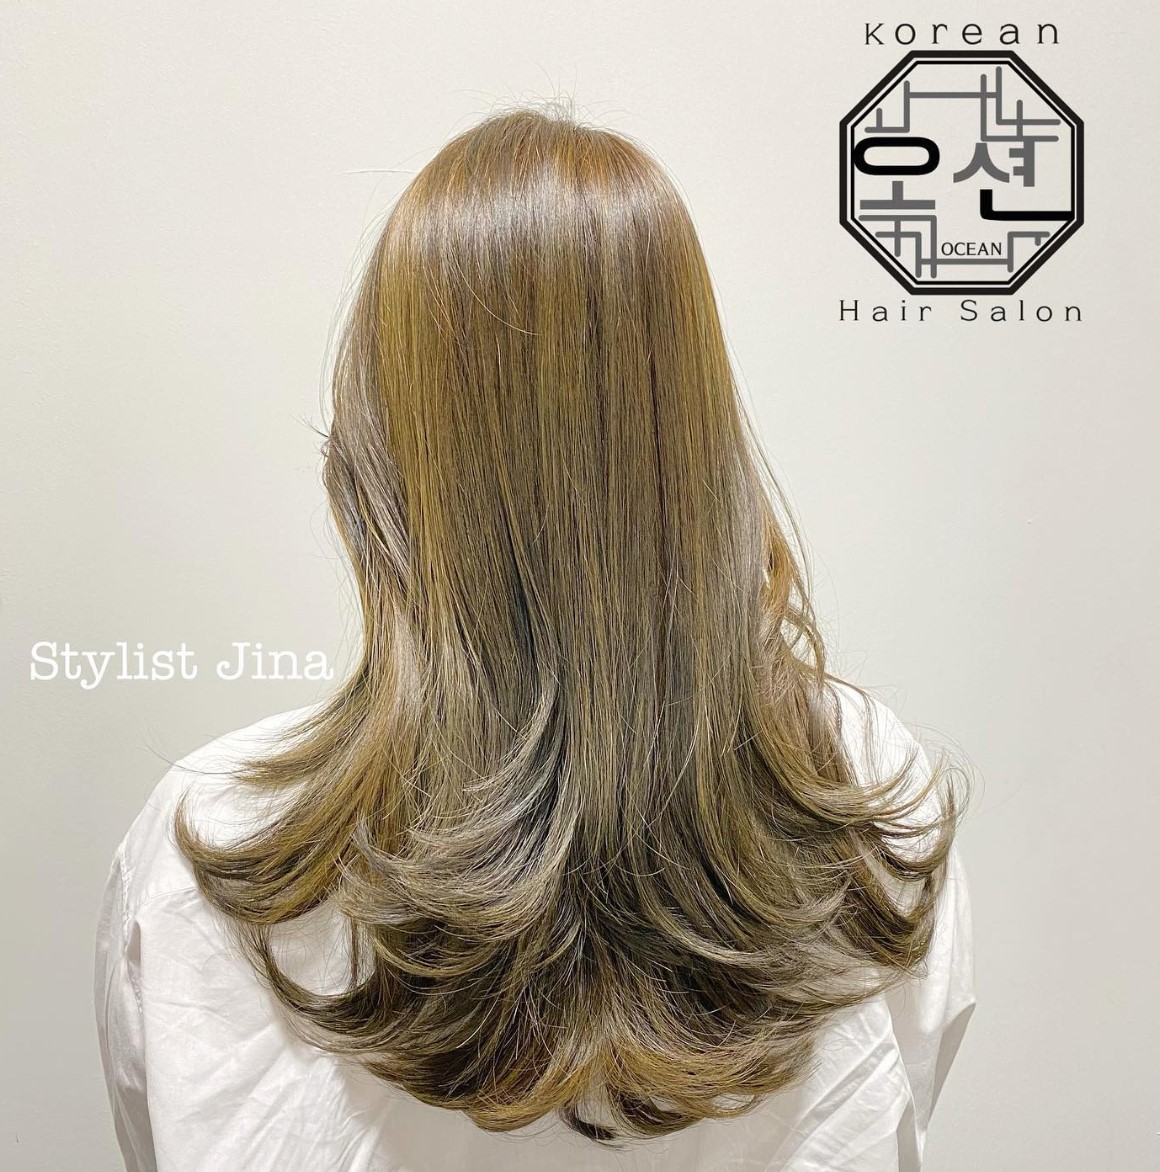 styled brown dyed hair at ocean korean hair salon 